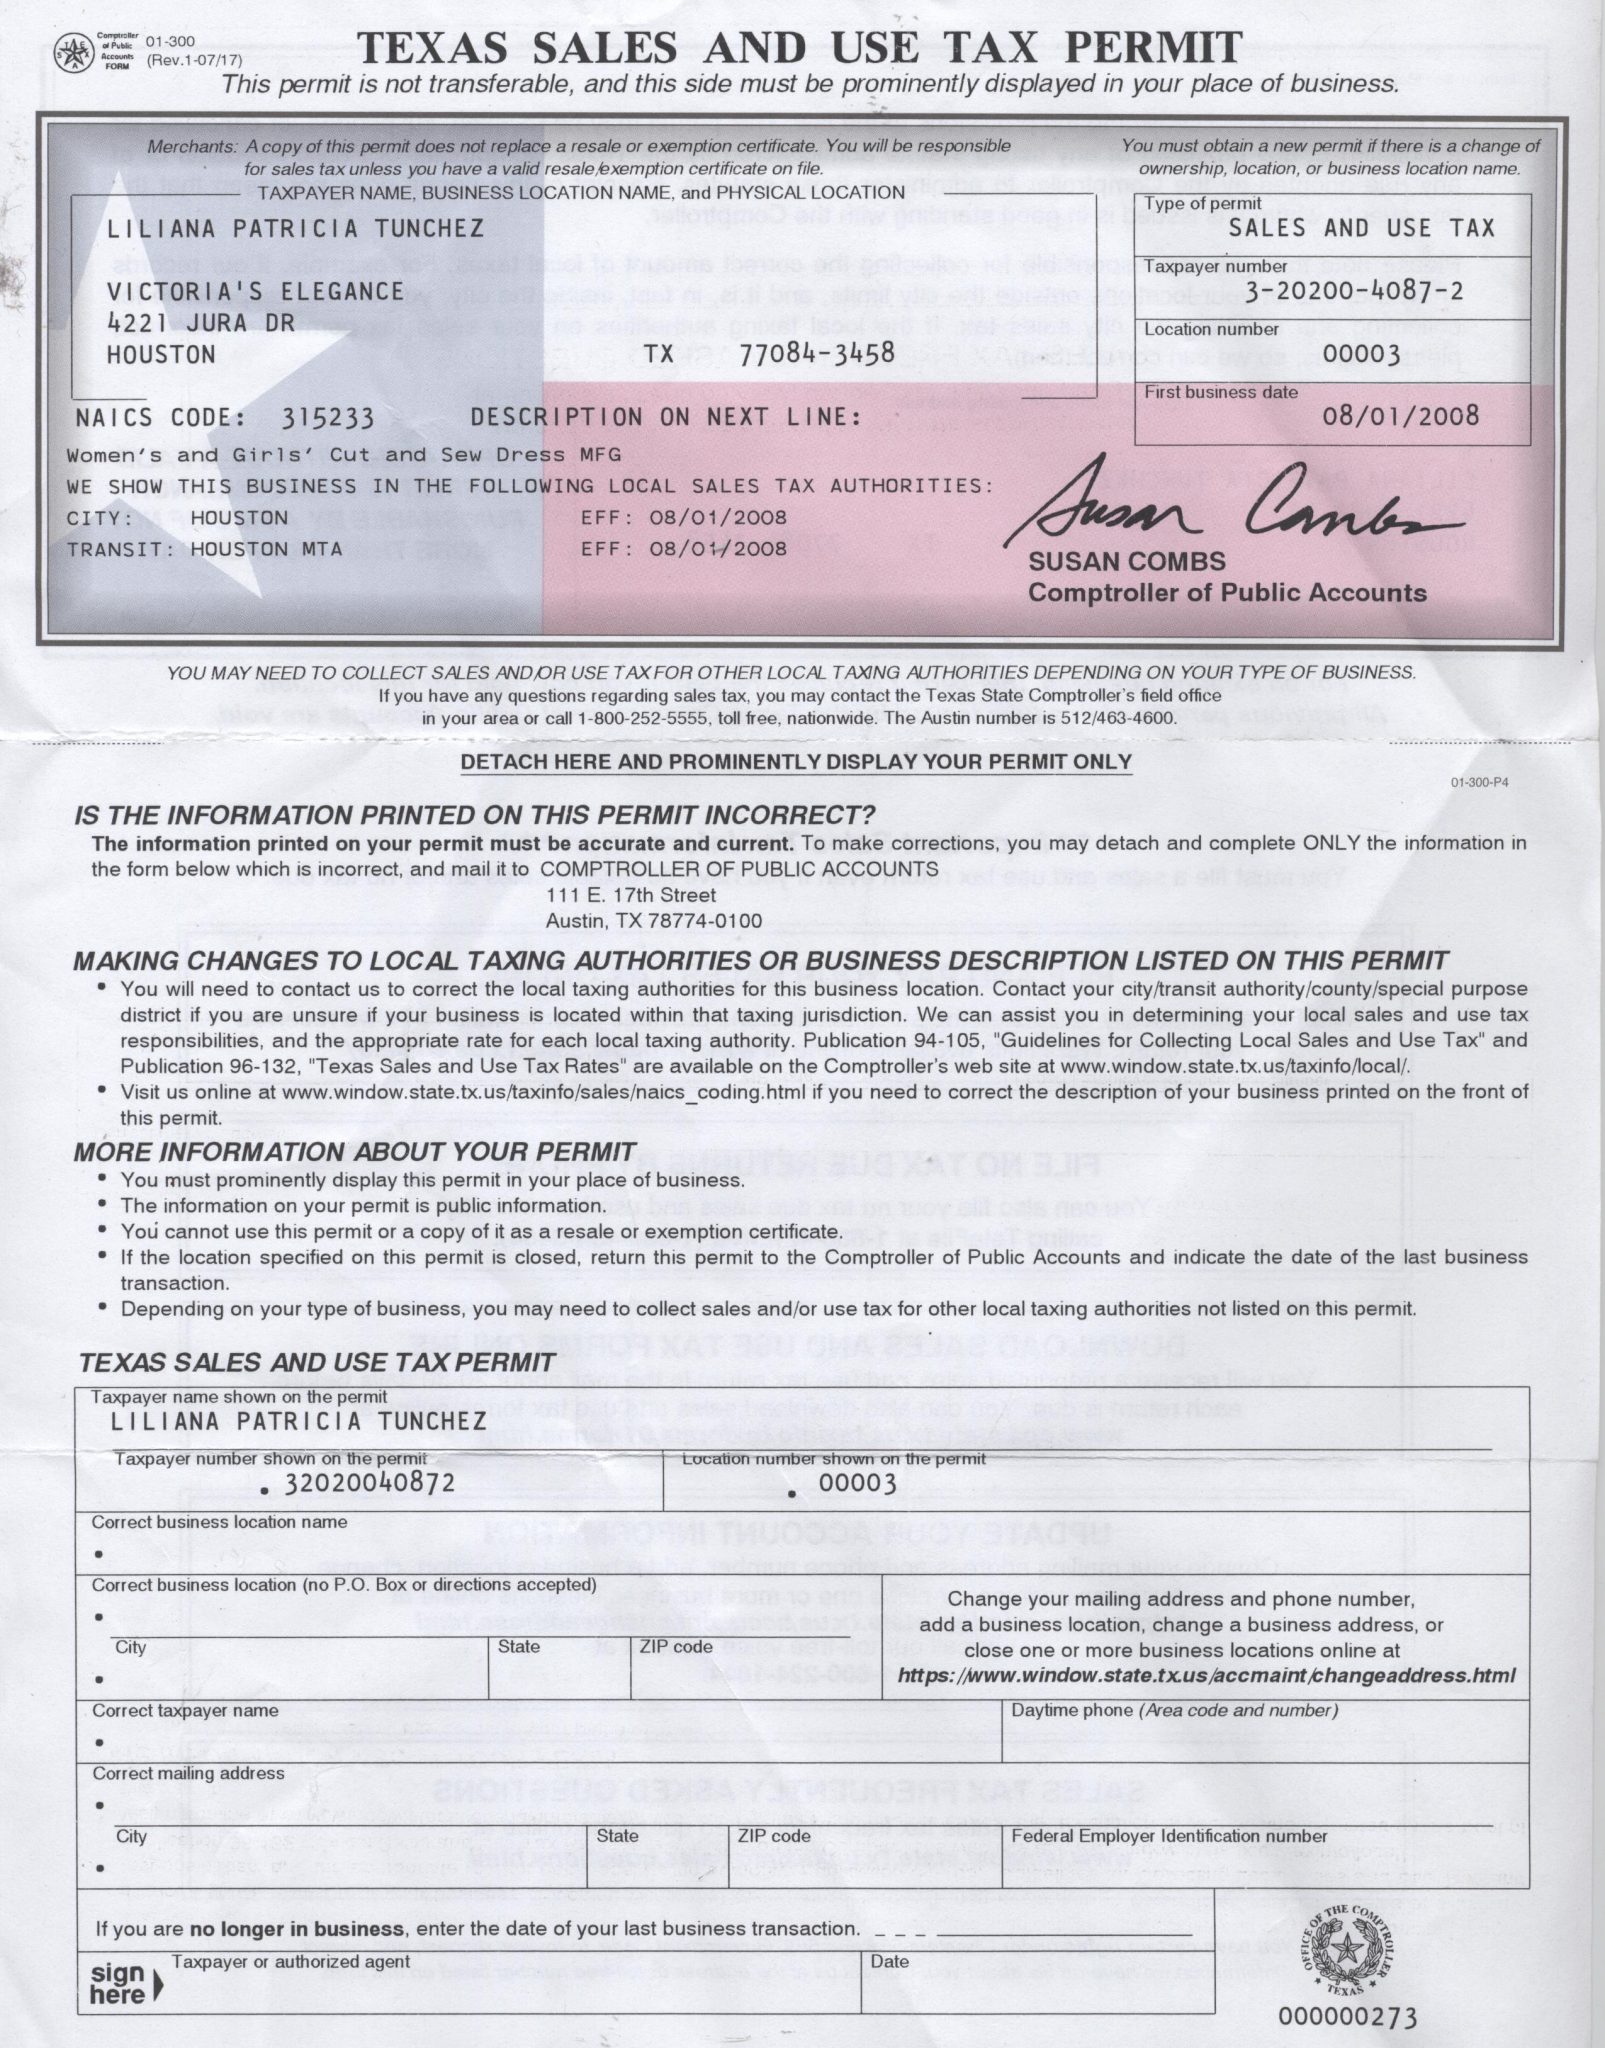 Texas Sales Tax Certificate.jpg Eva USA